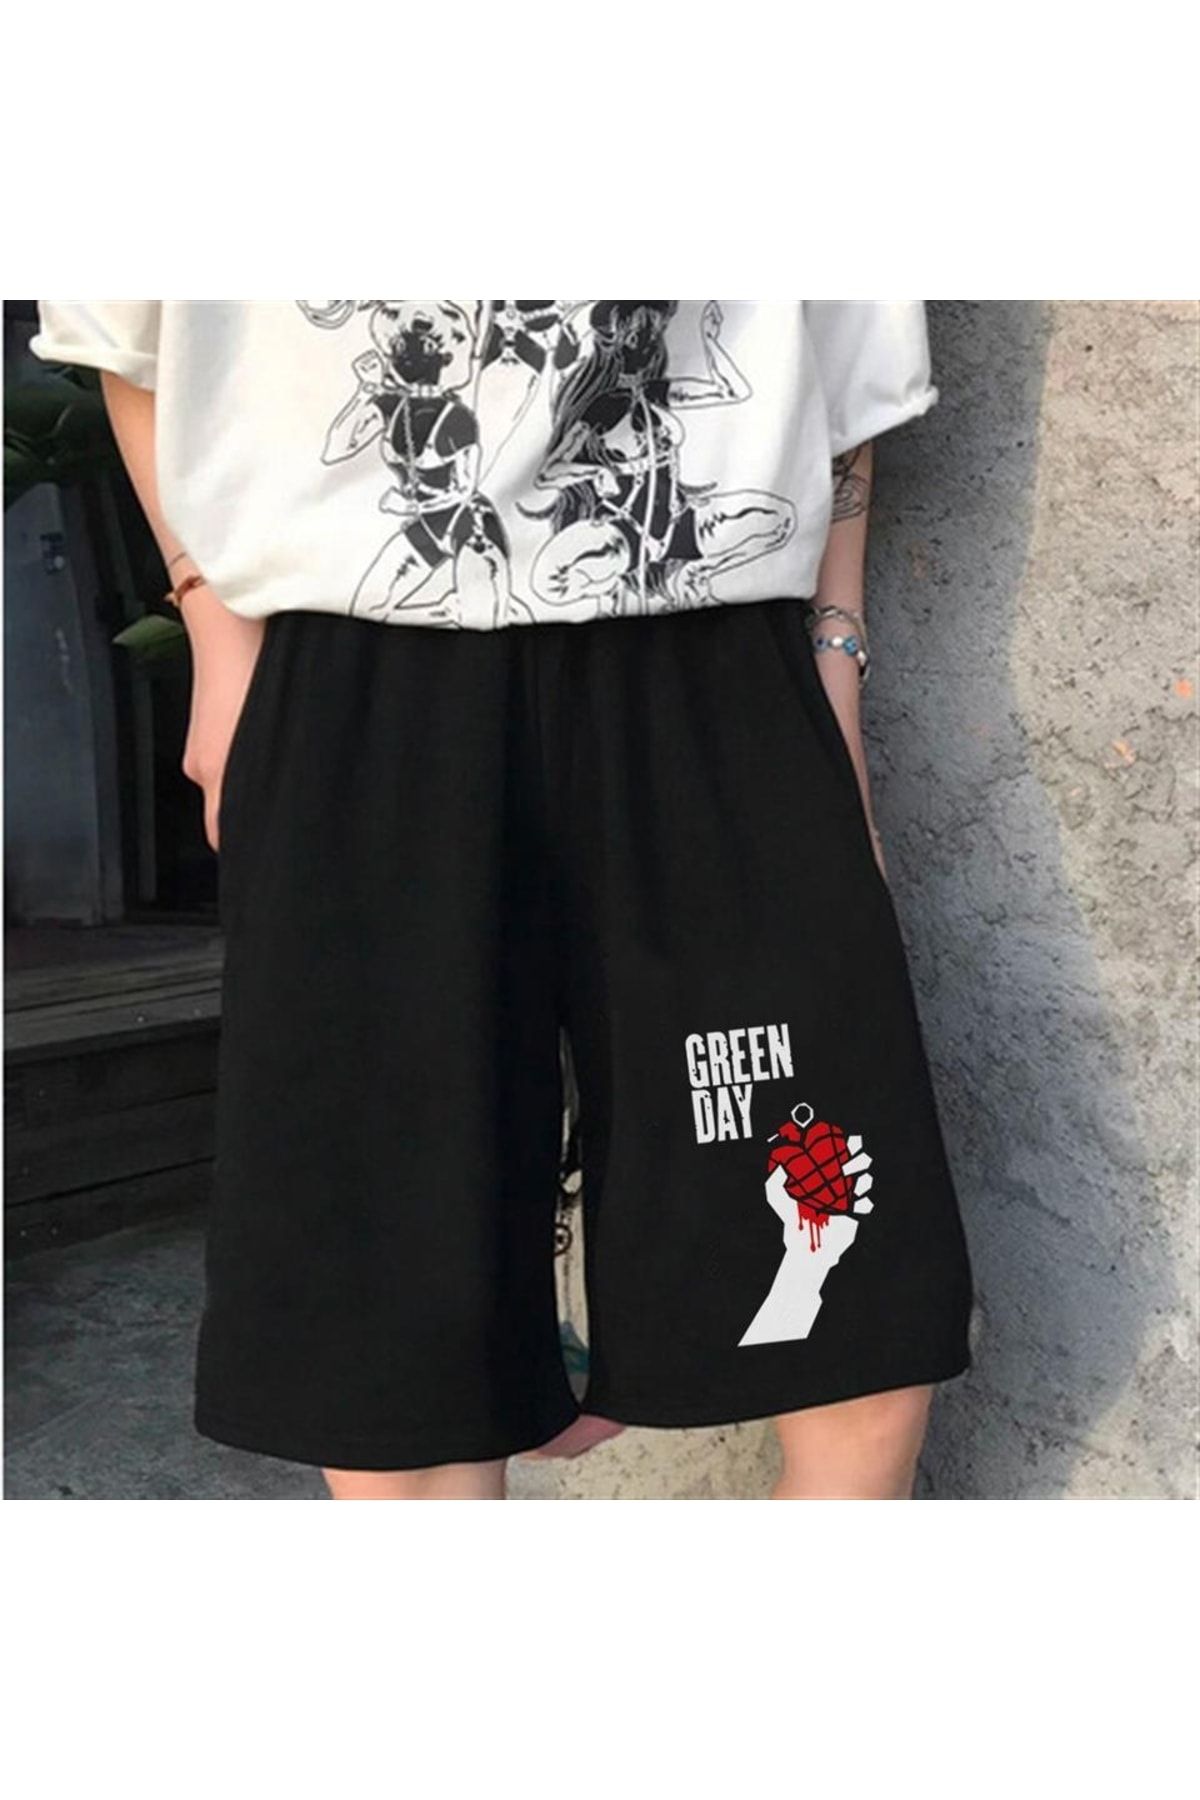 Gofeel Green Day Desenli Siyah Renkli Unisex Penye Şort